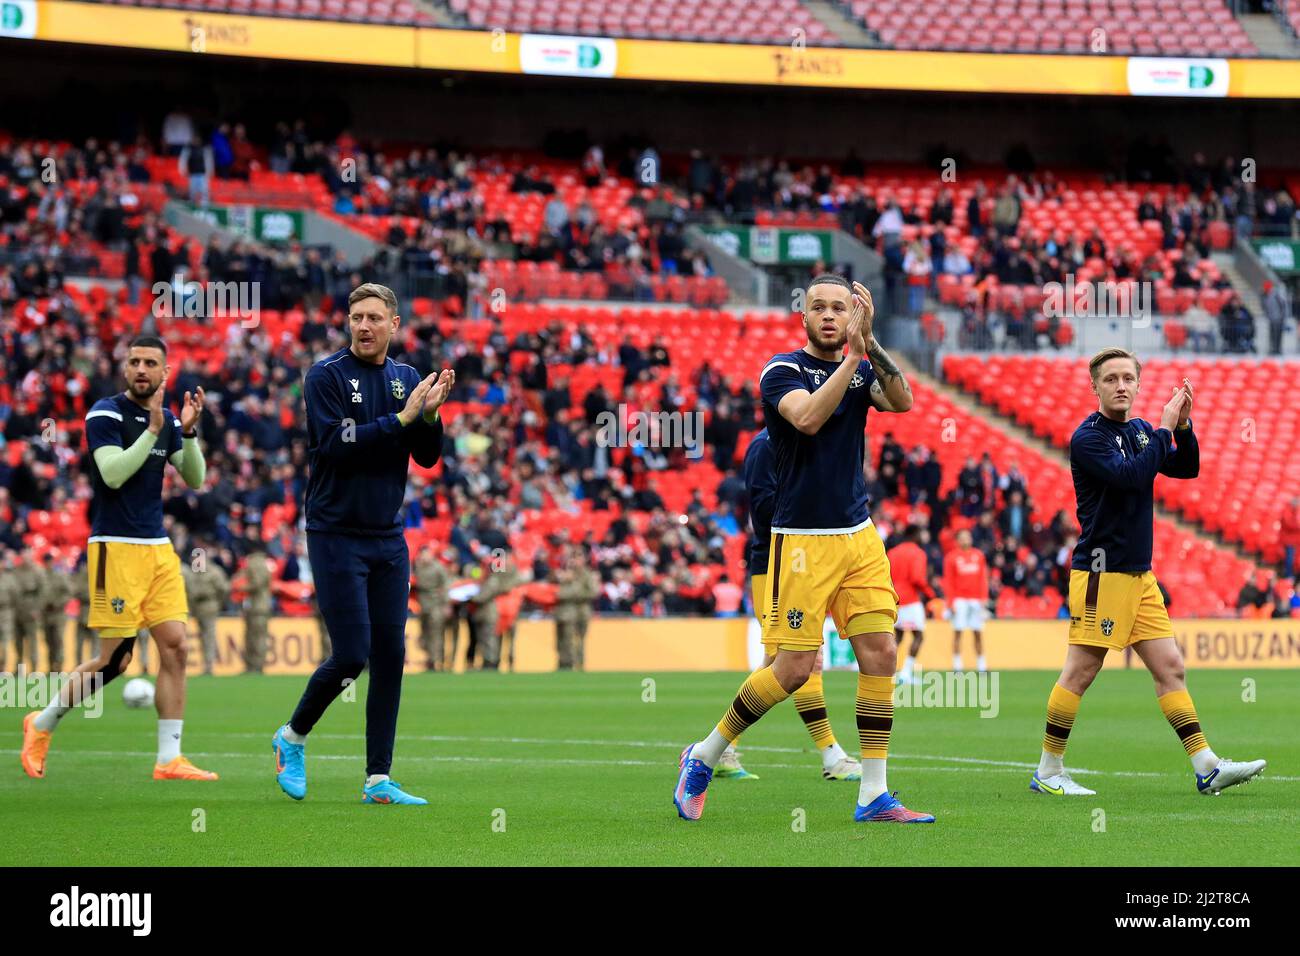 (L-R) , Omar Bugiel, Richard Bennett, Louis John and Ben Wyatt #3 of Sutton United applaud fans. Stock Photo